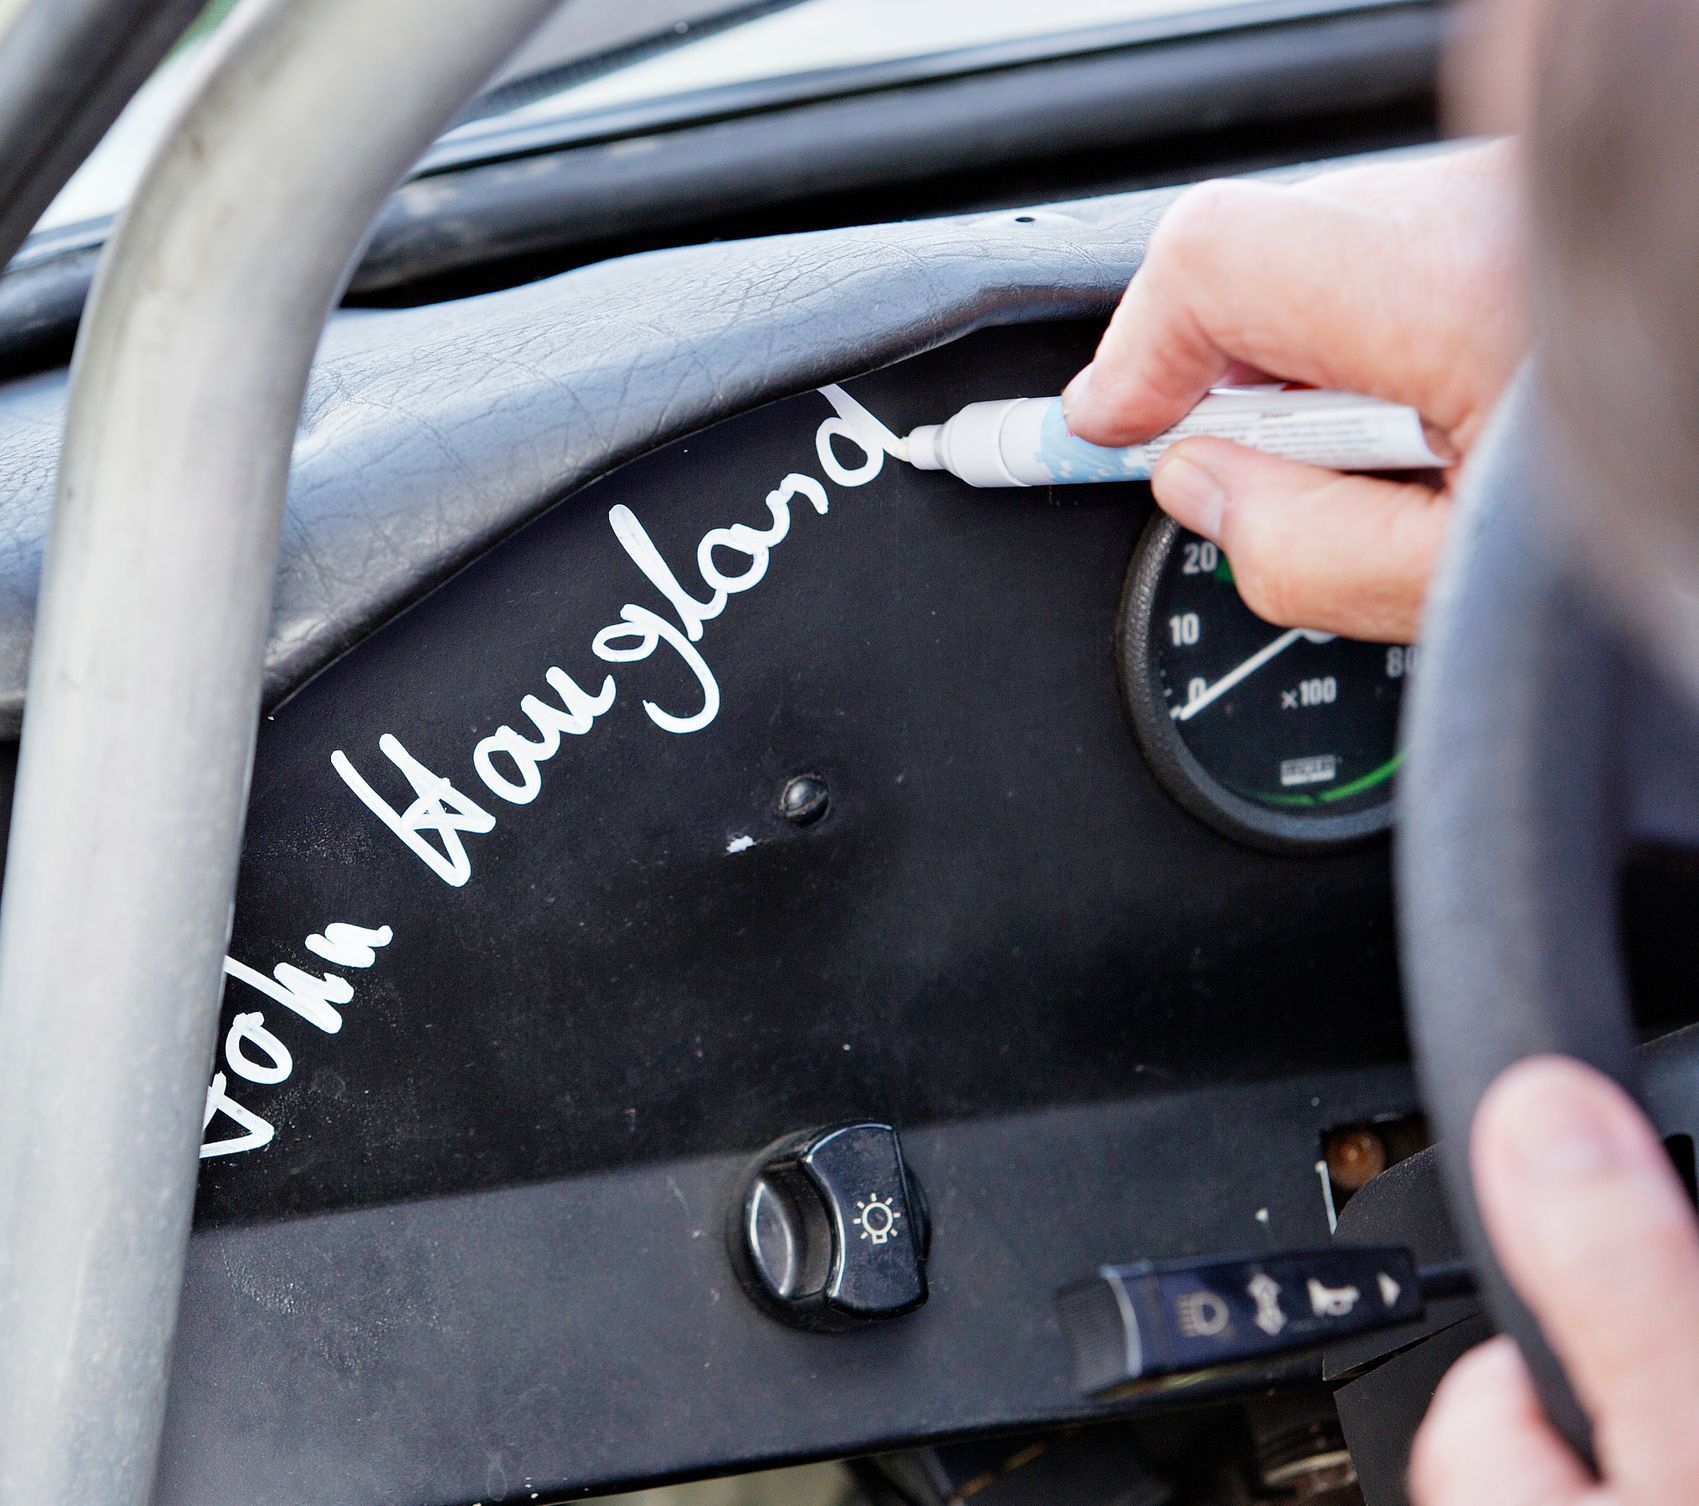 Haugland podepisuje své bývalé auto